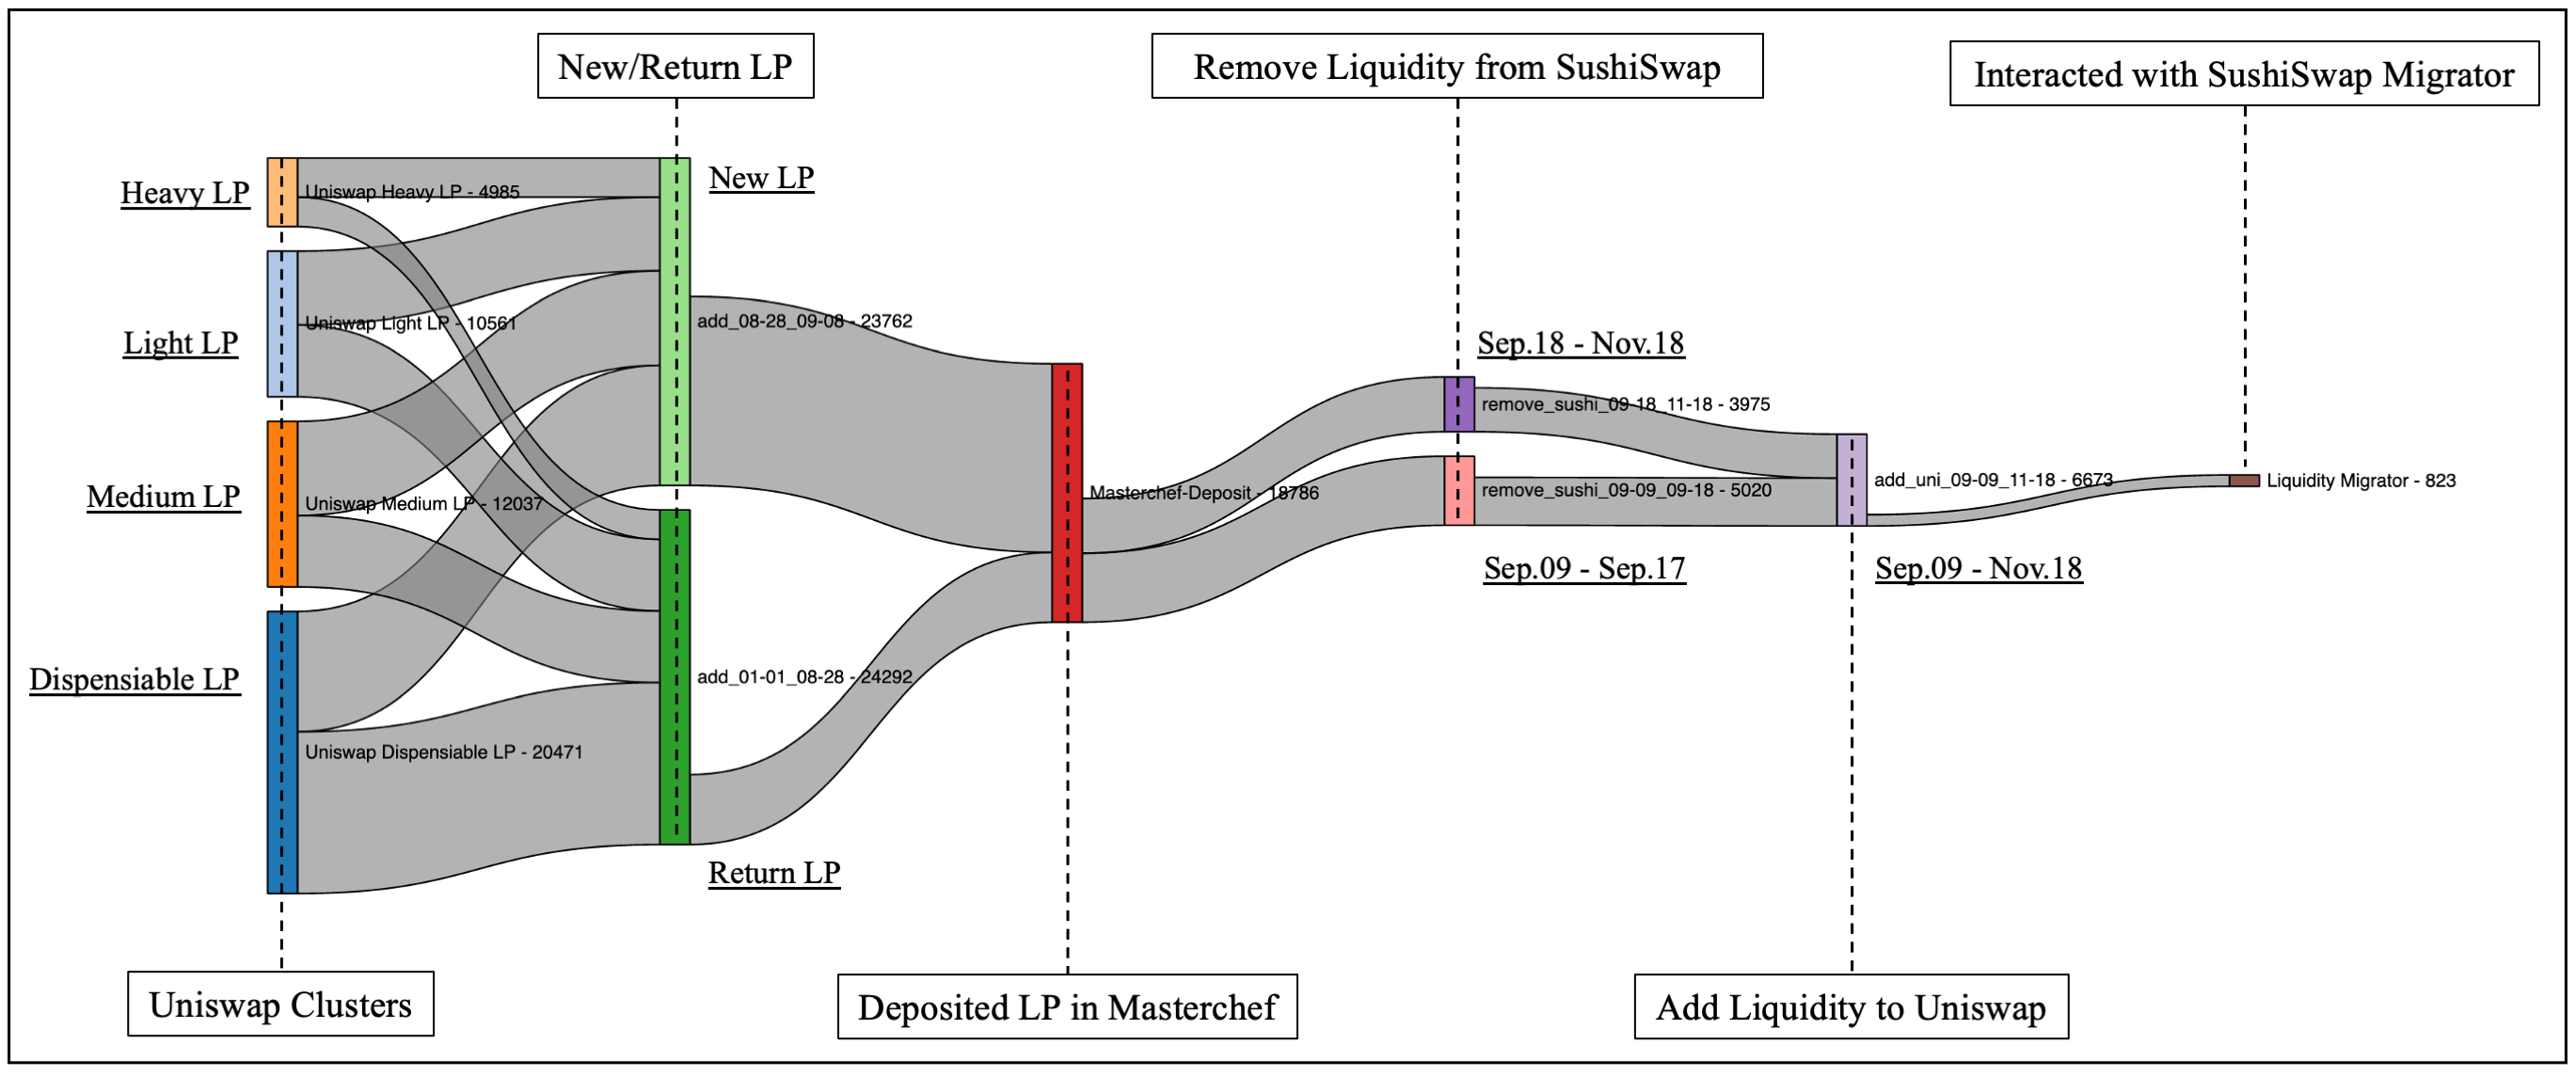 Towards Understanding Governance Tokens in Liquidity Mining: A Case Study of Decentralized Exchanges